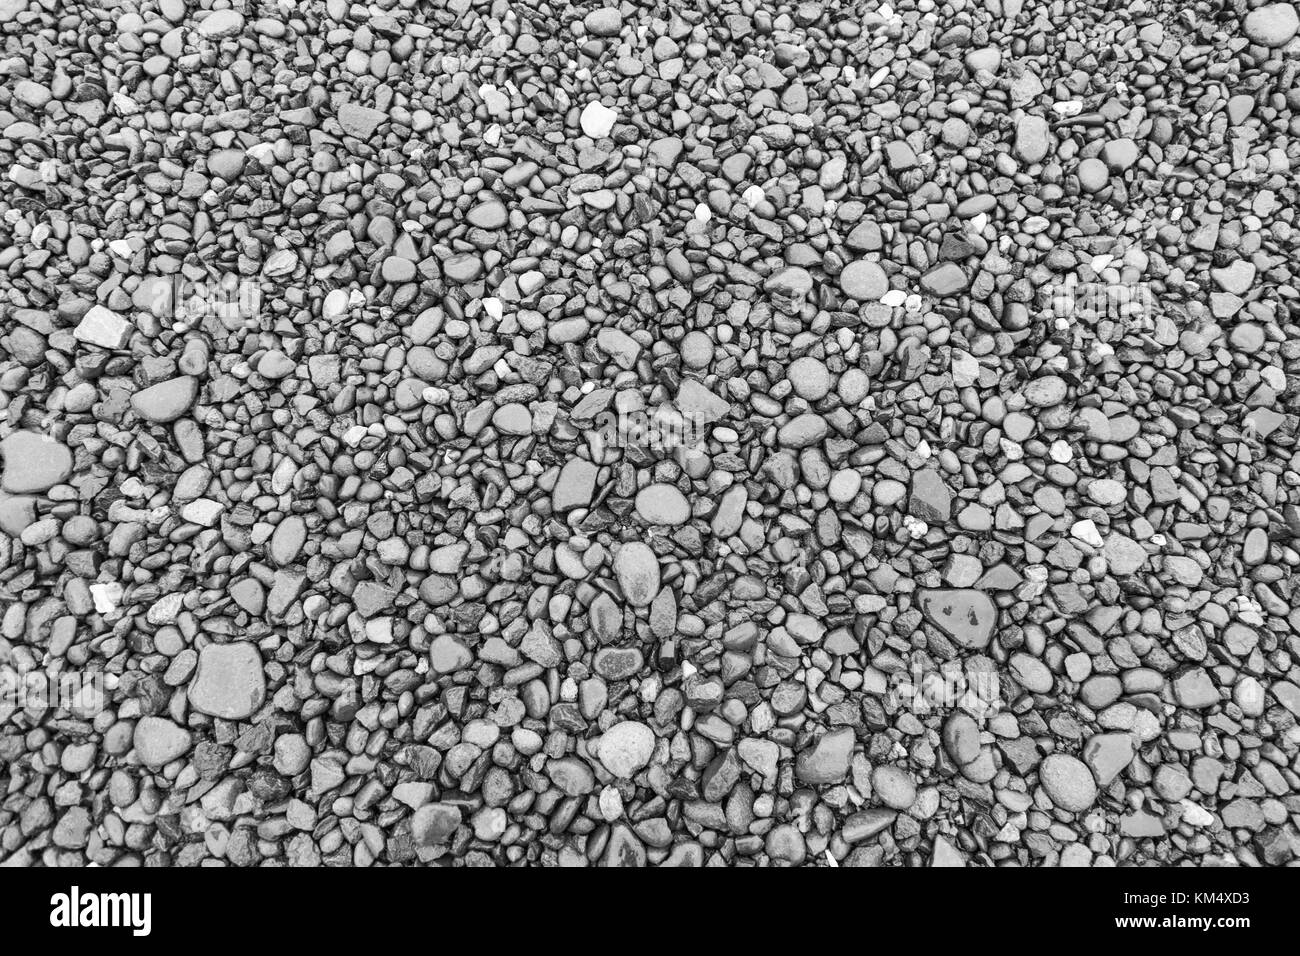 Wet pebble, rocks background Stock Photo